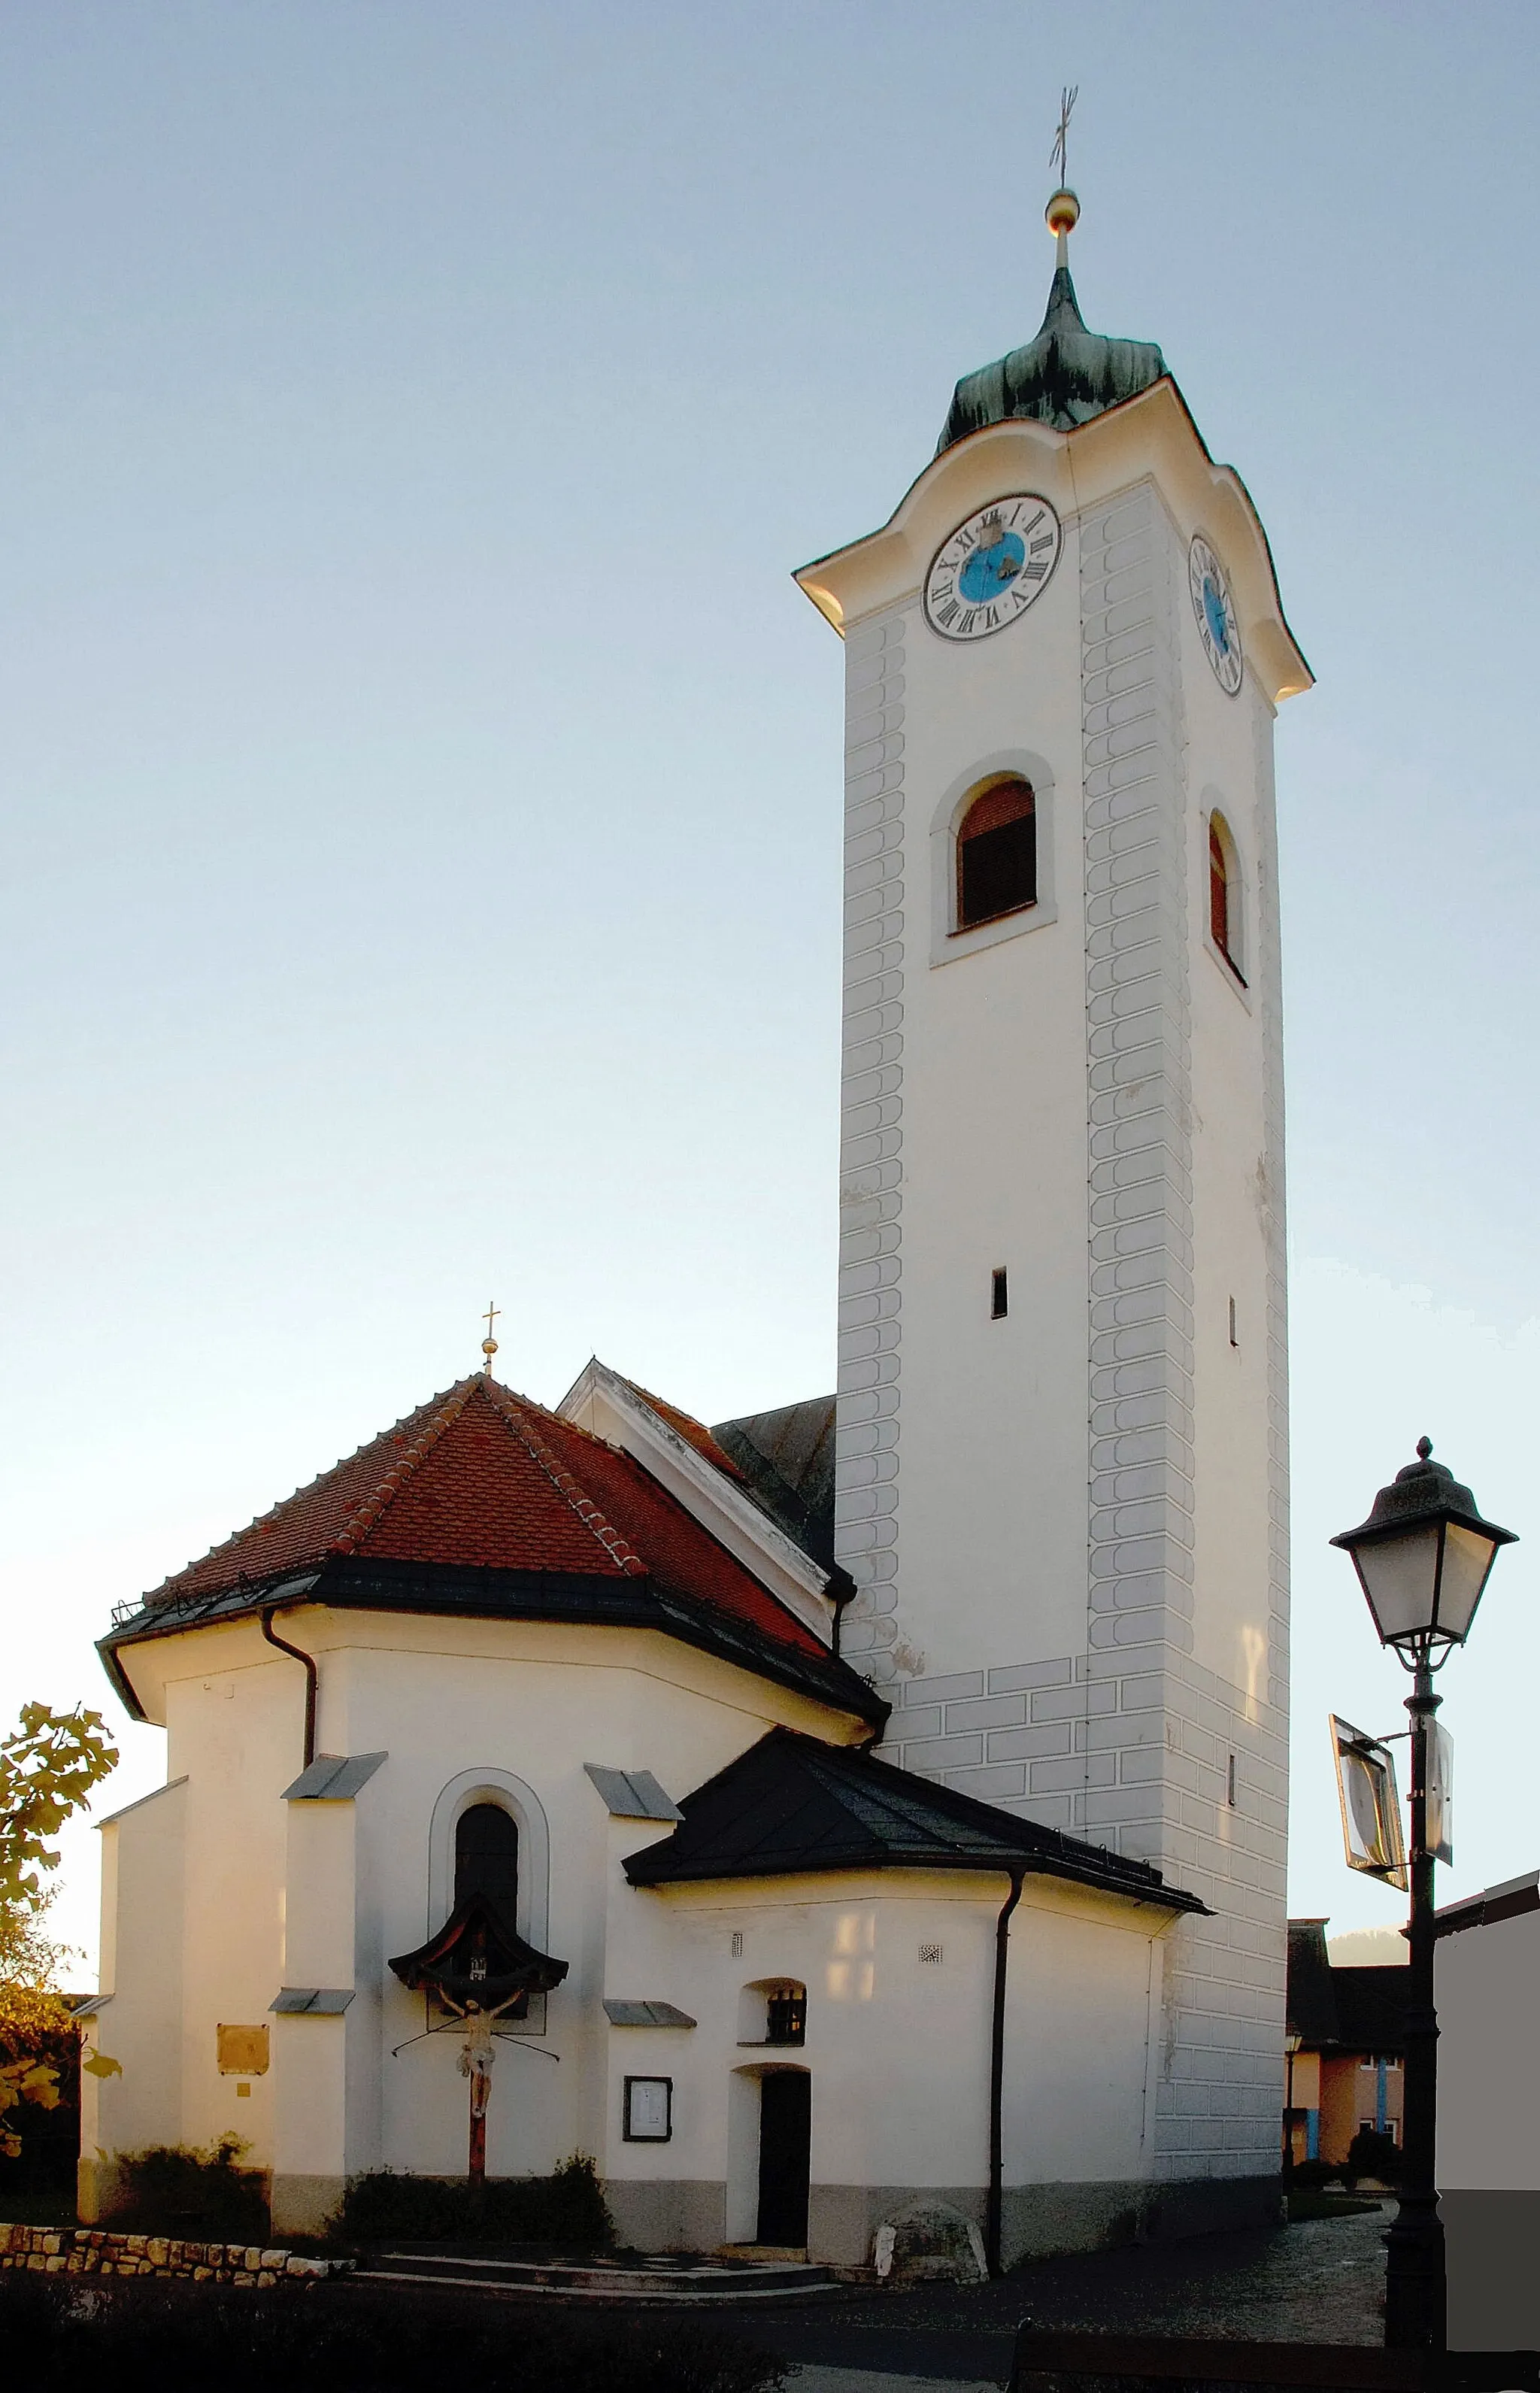 Photo showing: Subsidiary church Saint Michael on Amthofgasse, municipality Feldkirchen, district Feldkirchen, Carinthia, Austria, EU